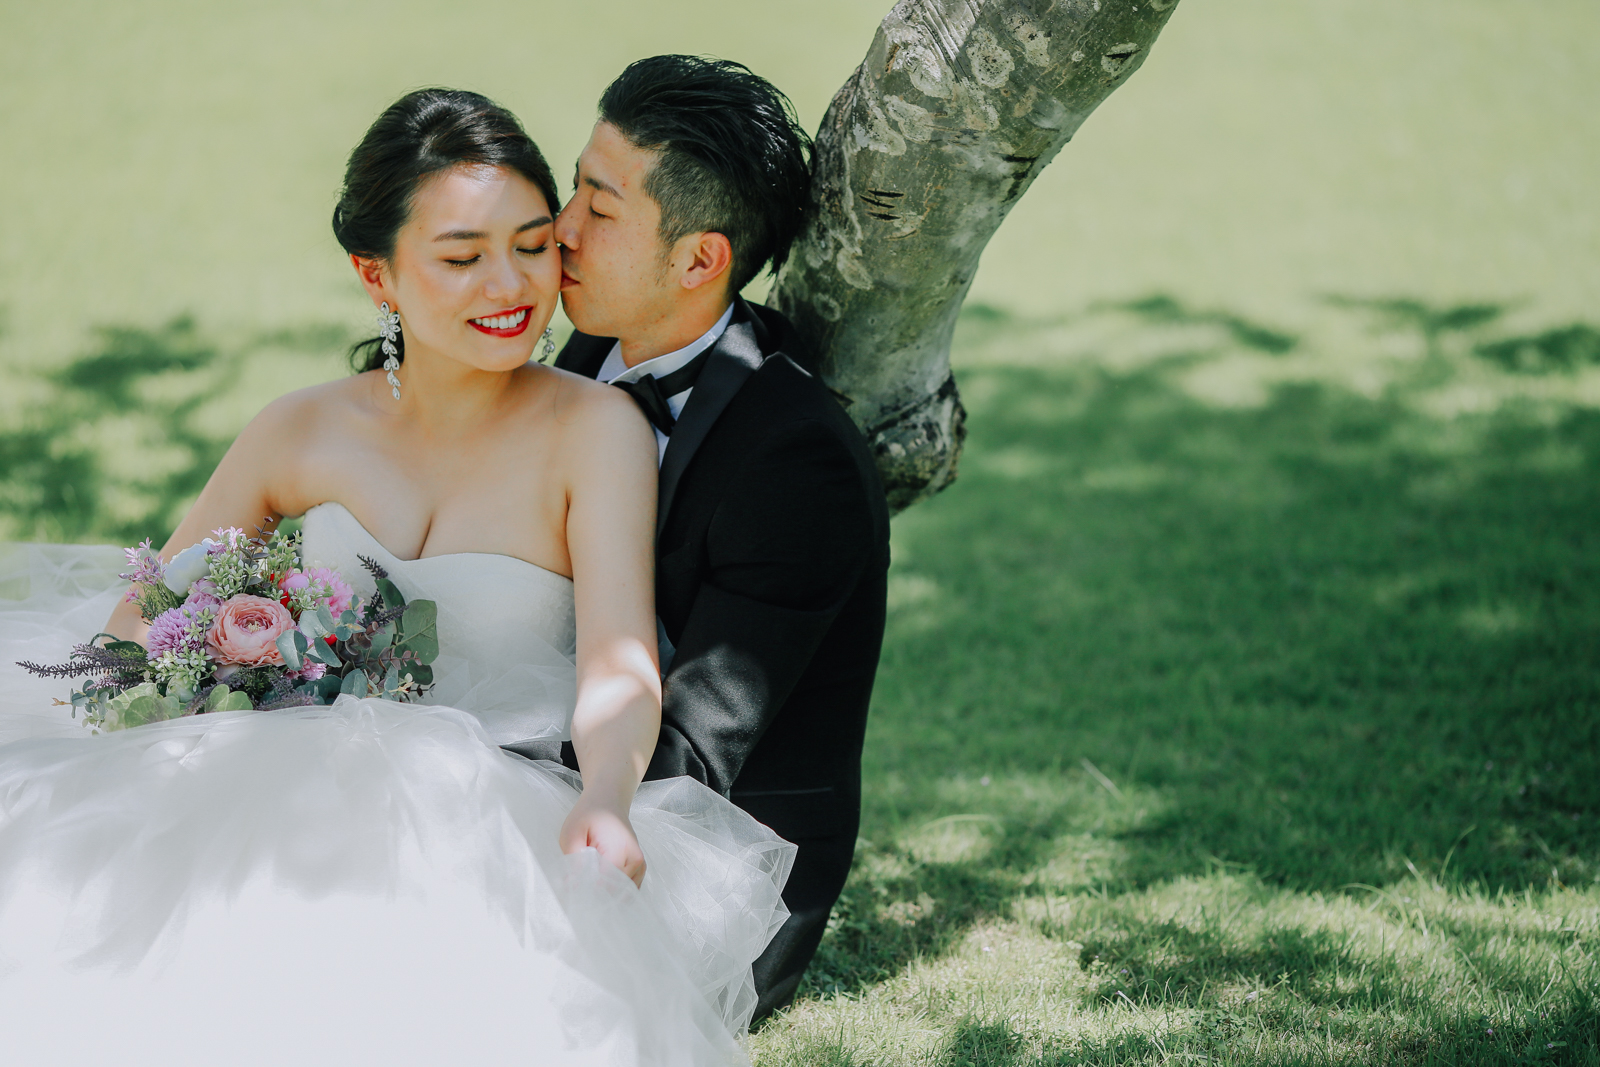 ctp 4 6 - Shojiro & Hiroko's Shangrila Mactan Cebu Intimate Wedding